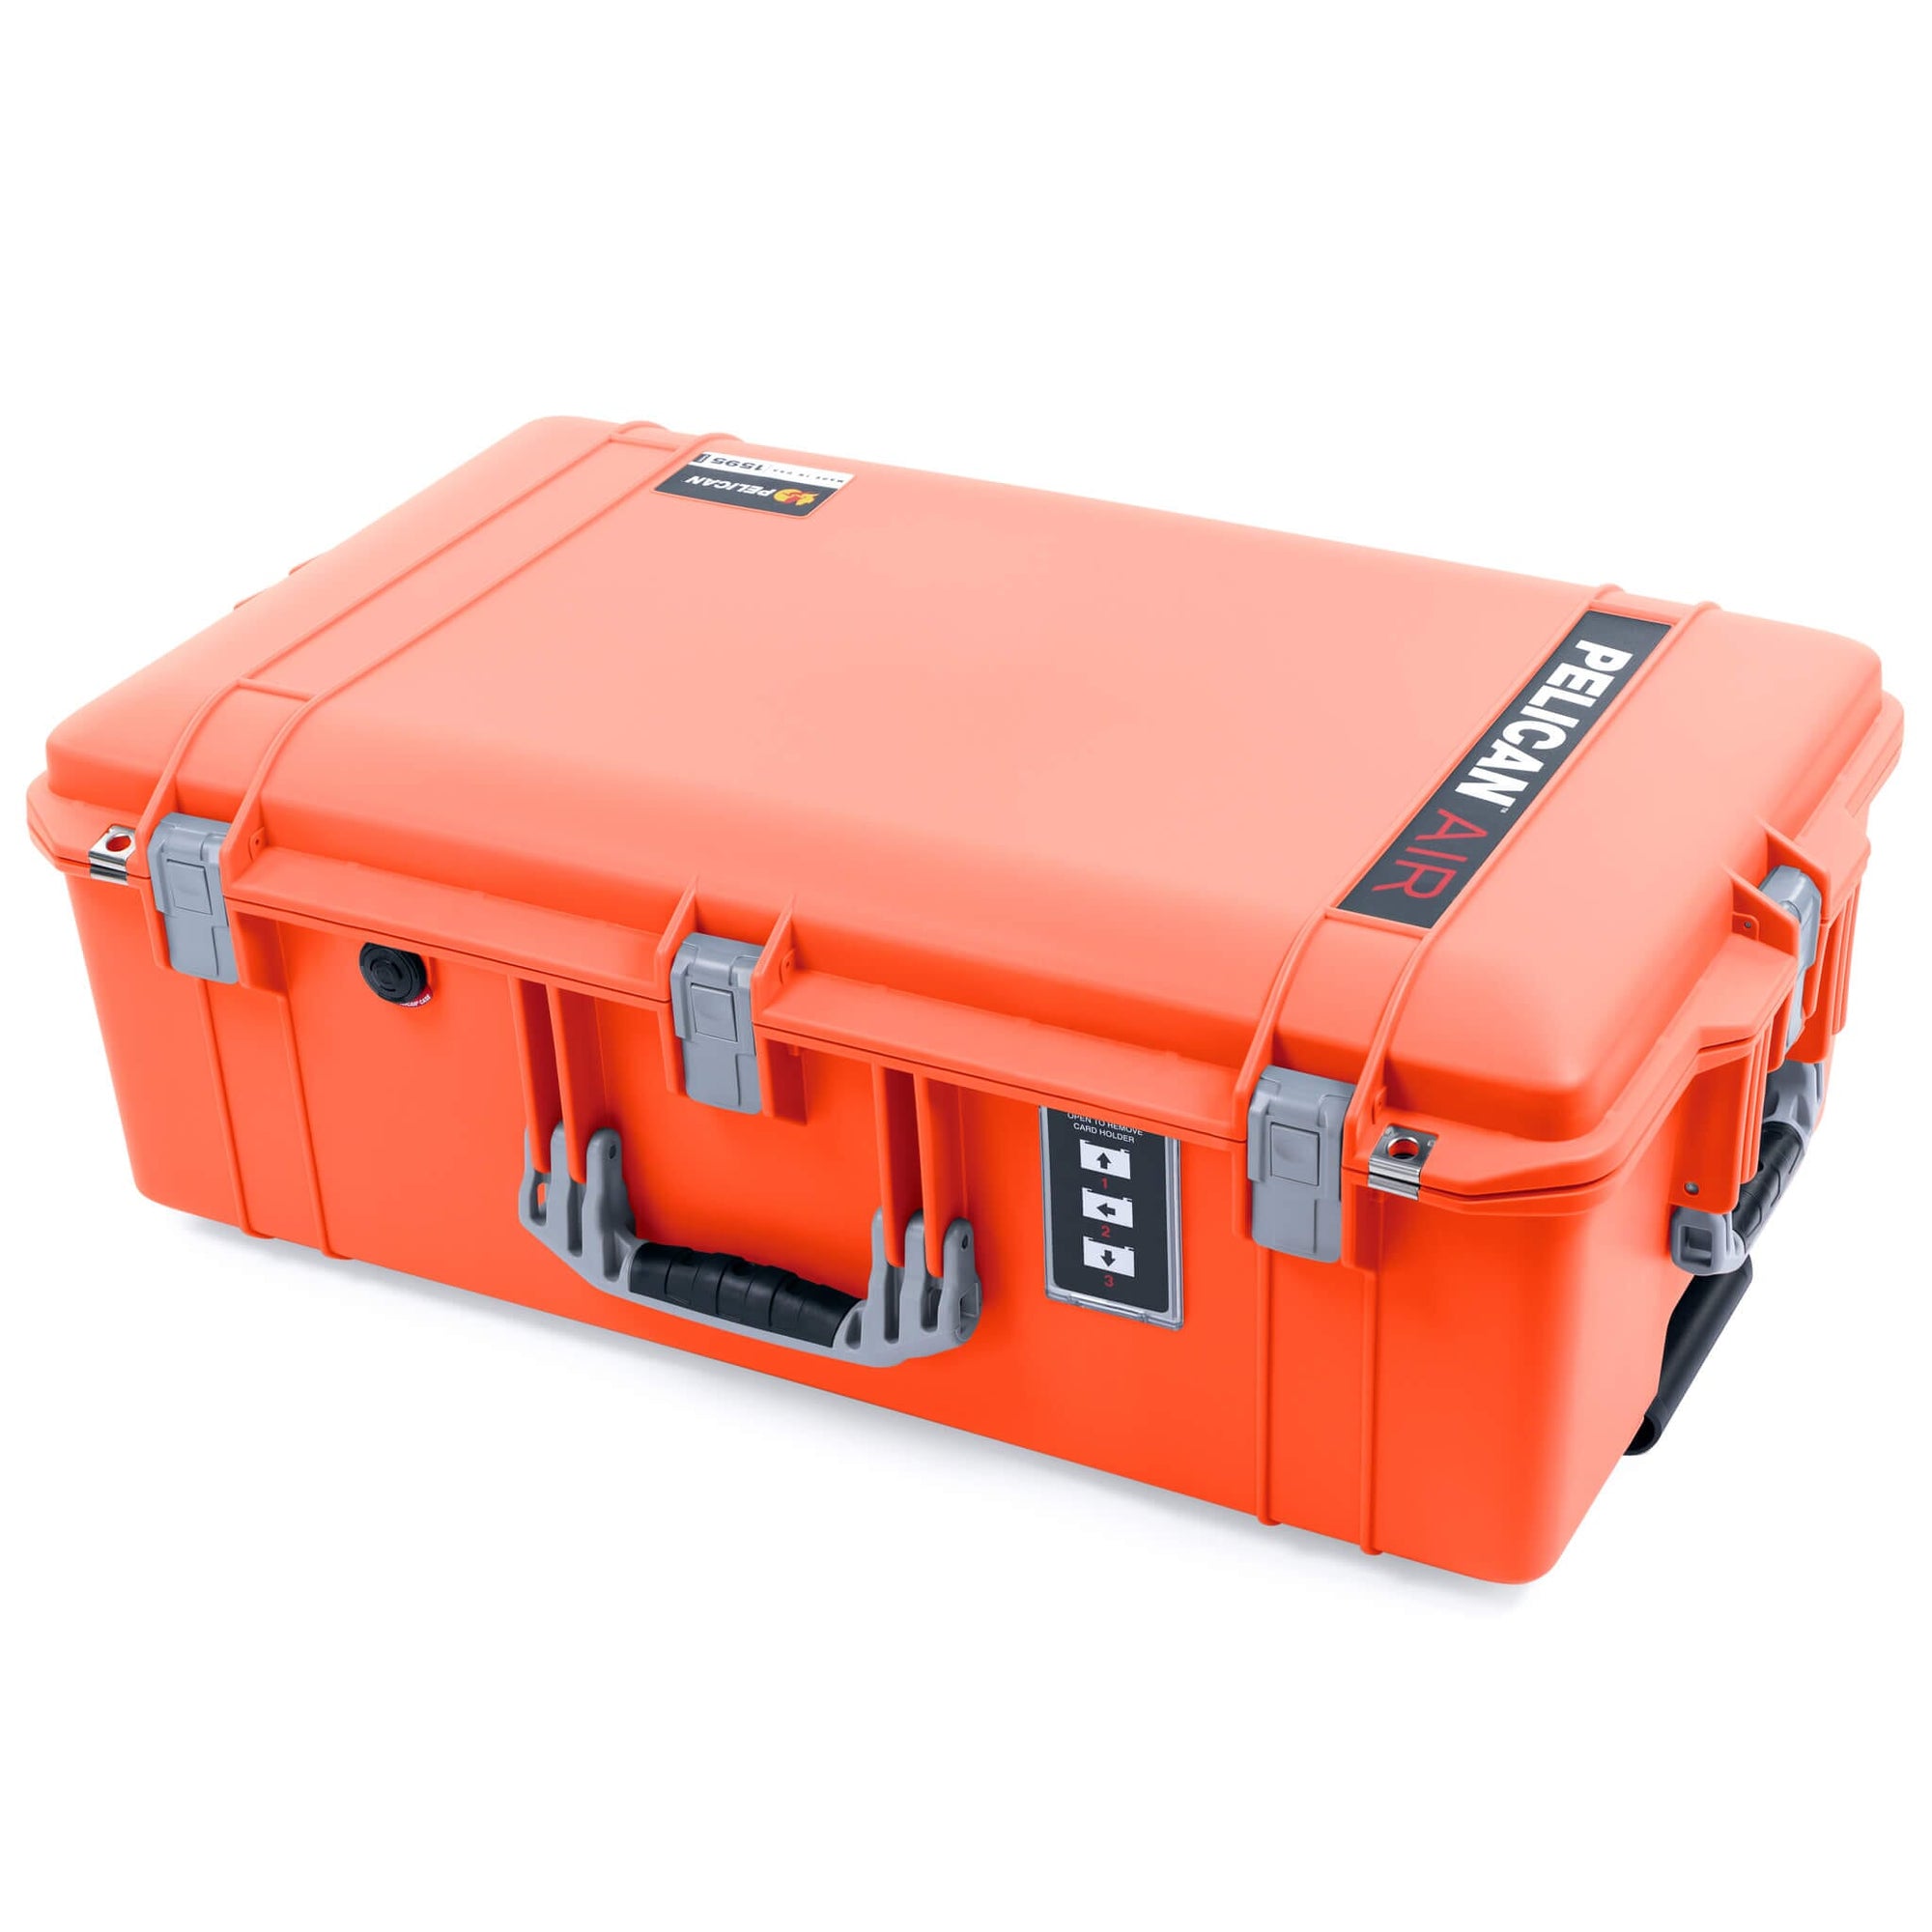 Pelican 1595 Air Case, Orange with Silver Handles & Push-Button Latches ColorCase 